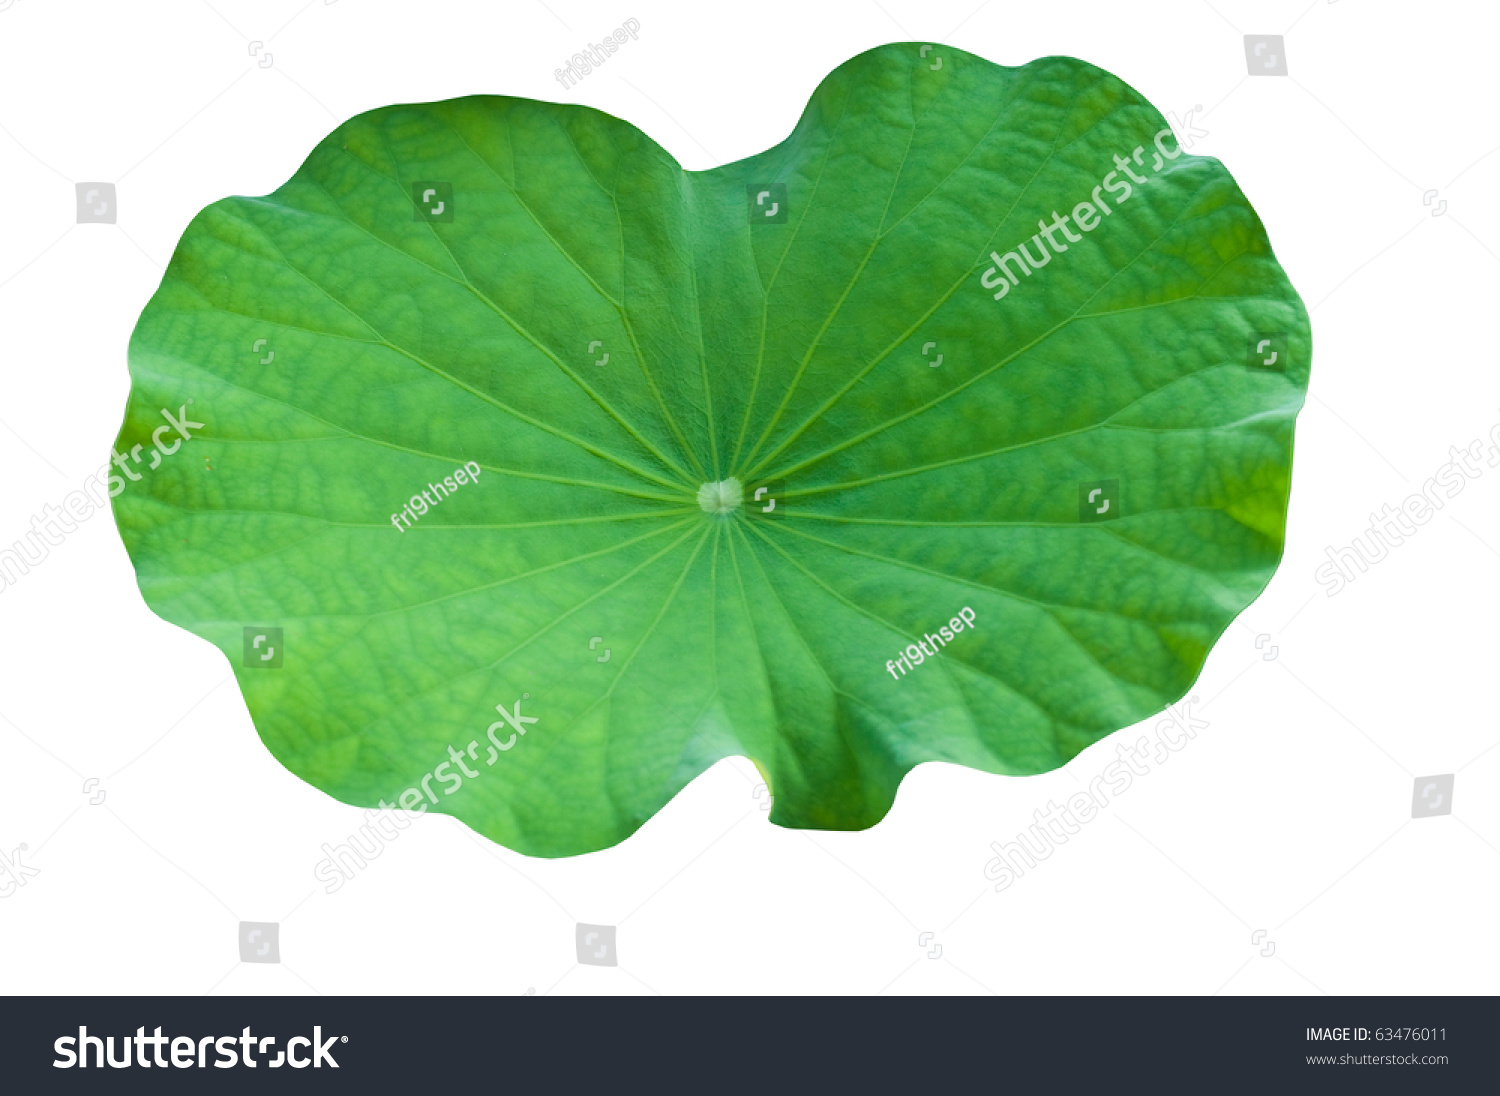 clip art lotus leaf - photo #19